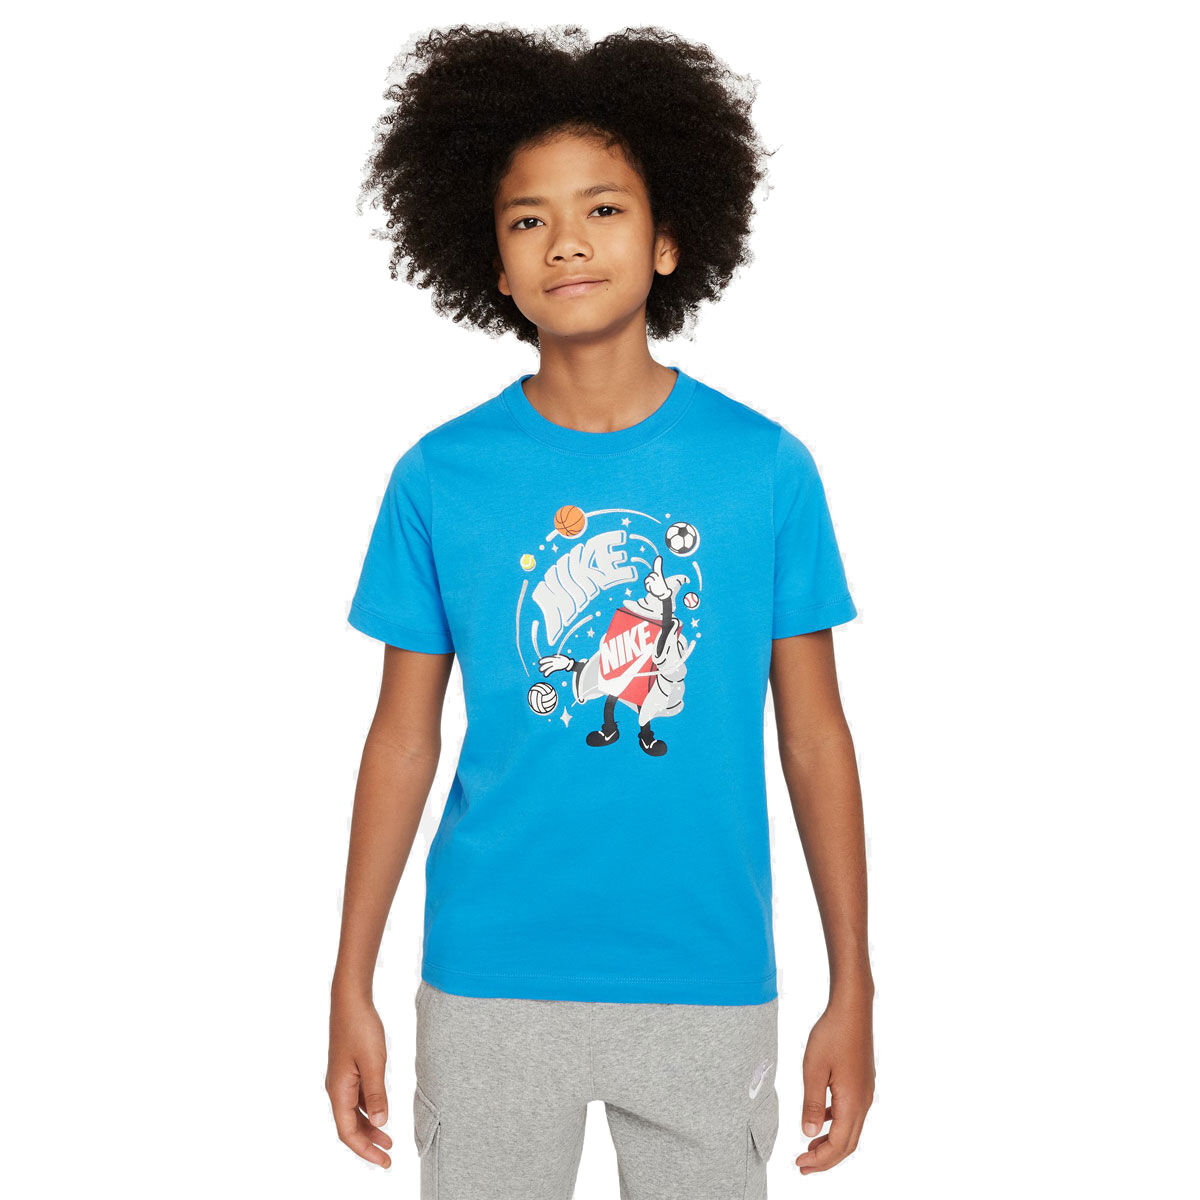 Kids Clothing, T-Shirts, Hoodies & more